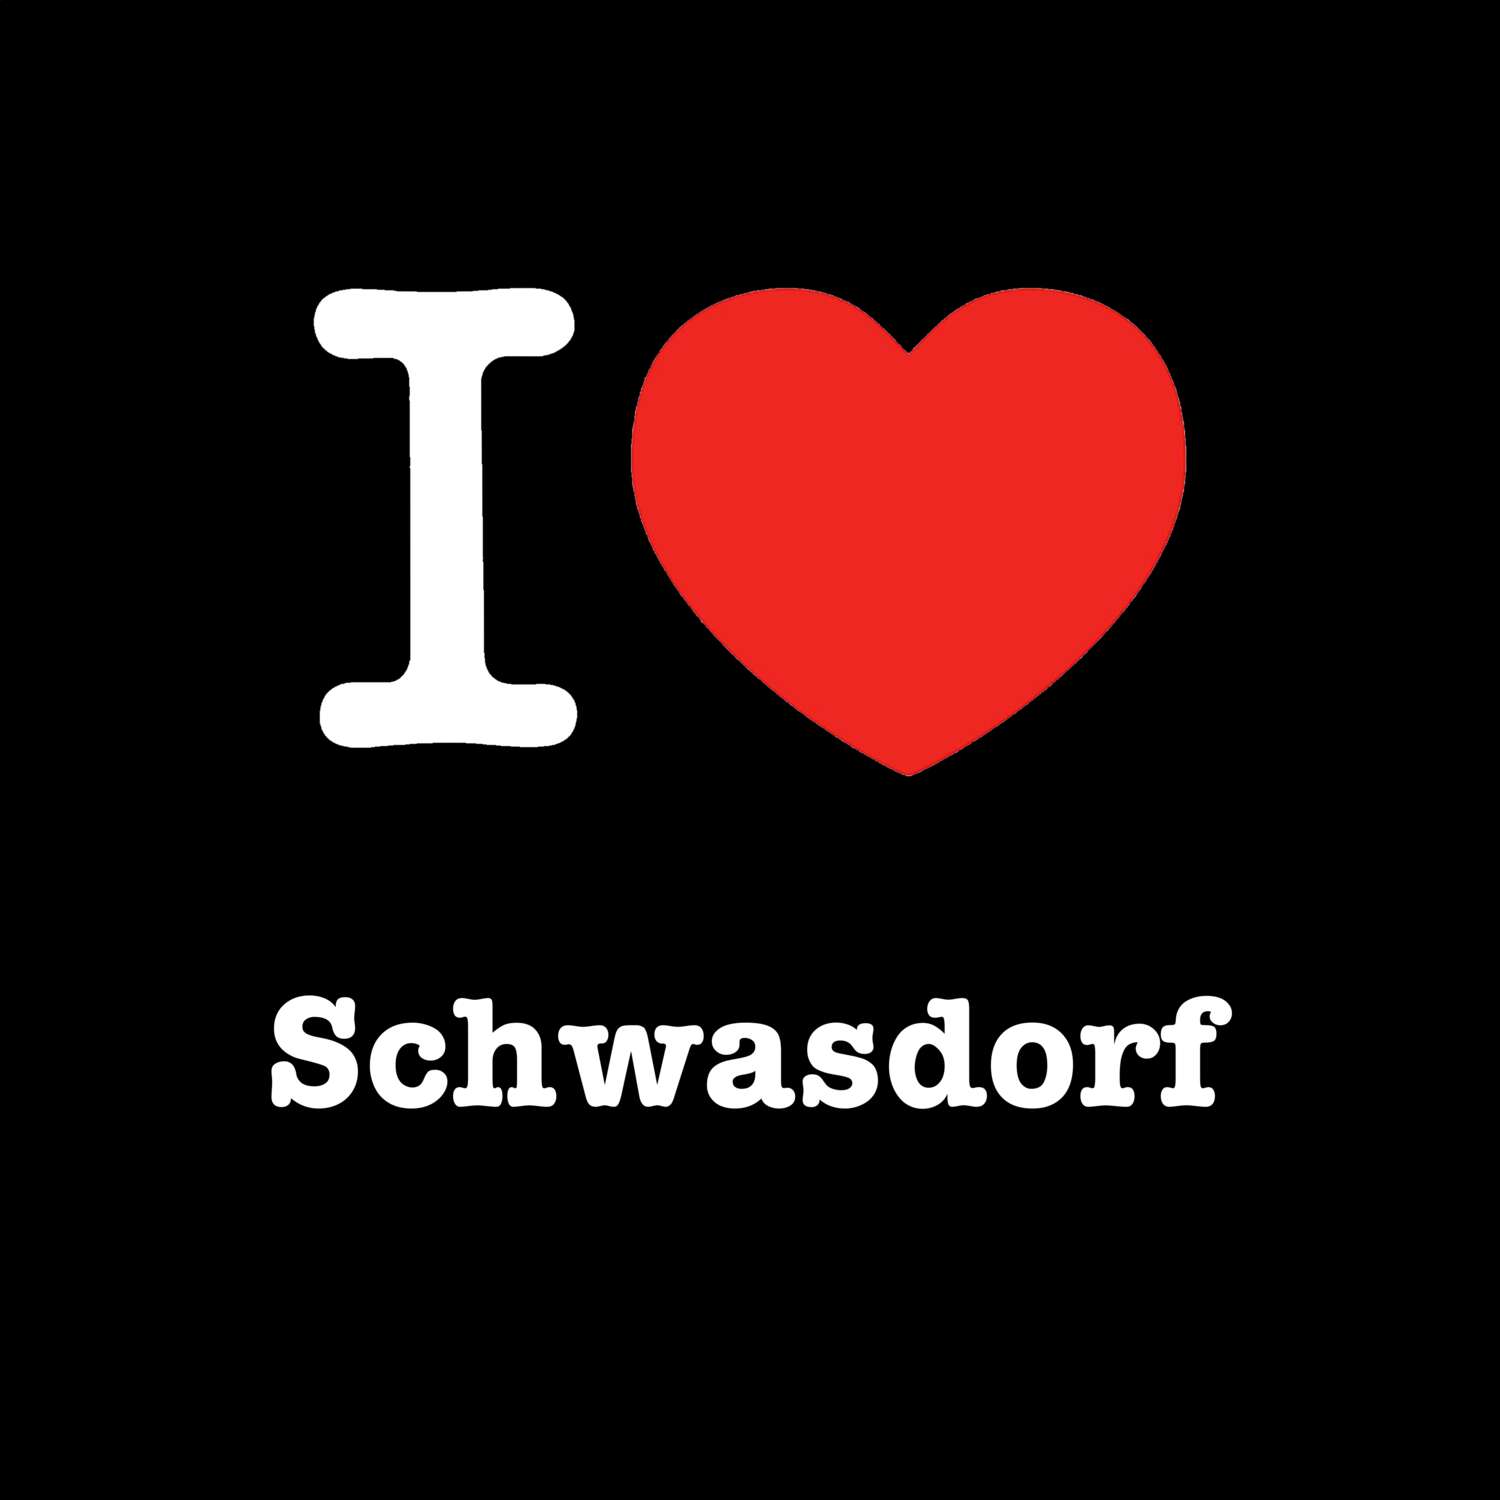 Schwasdorf T-Shirt »I love«